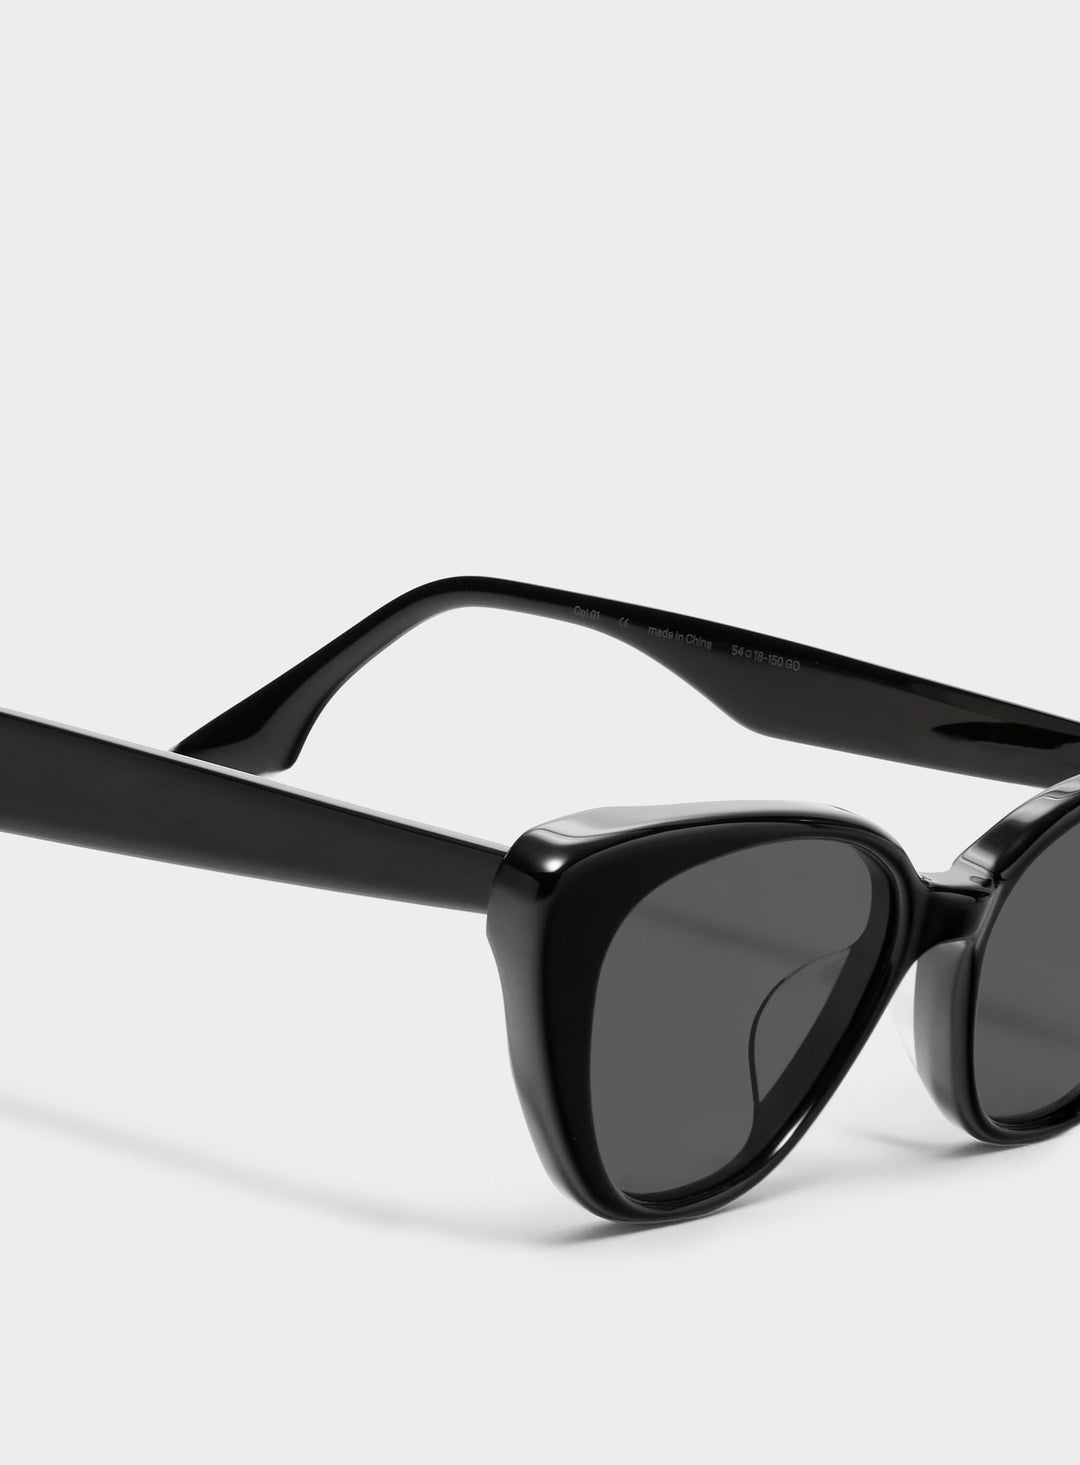 Close-up of Dawn in black cat-eye Sunglasses lenses, high-quality eyewear by Mercury Retrograde Daydream Collection 